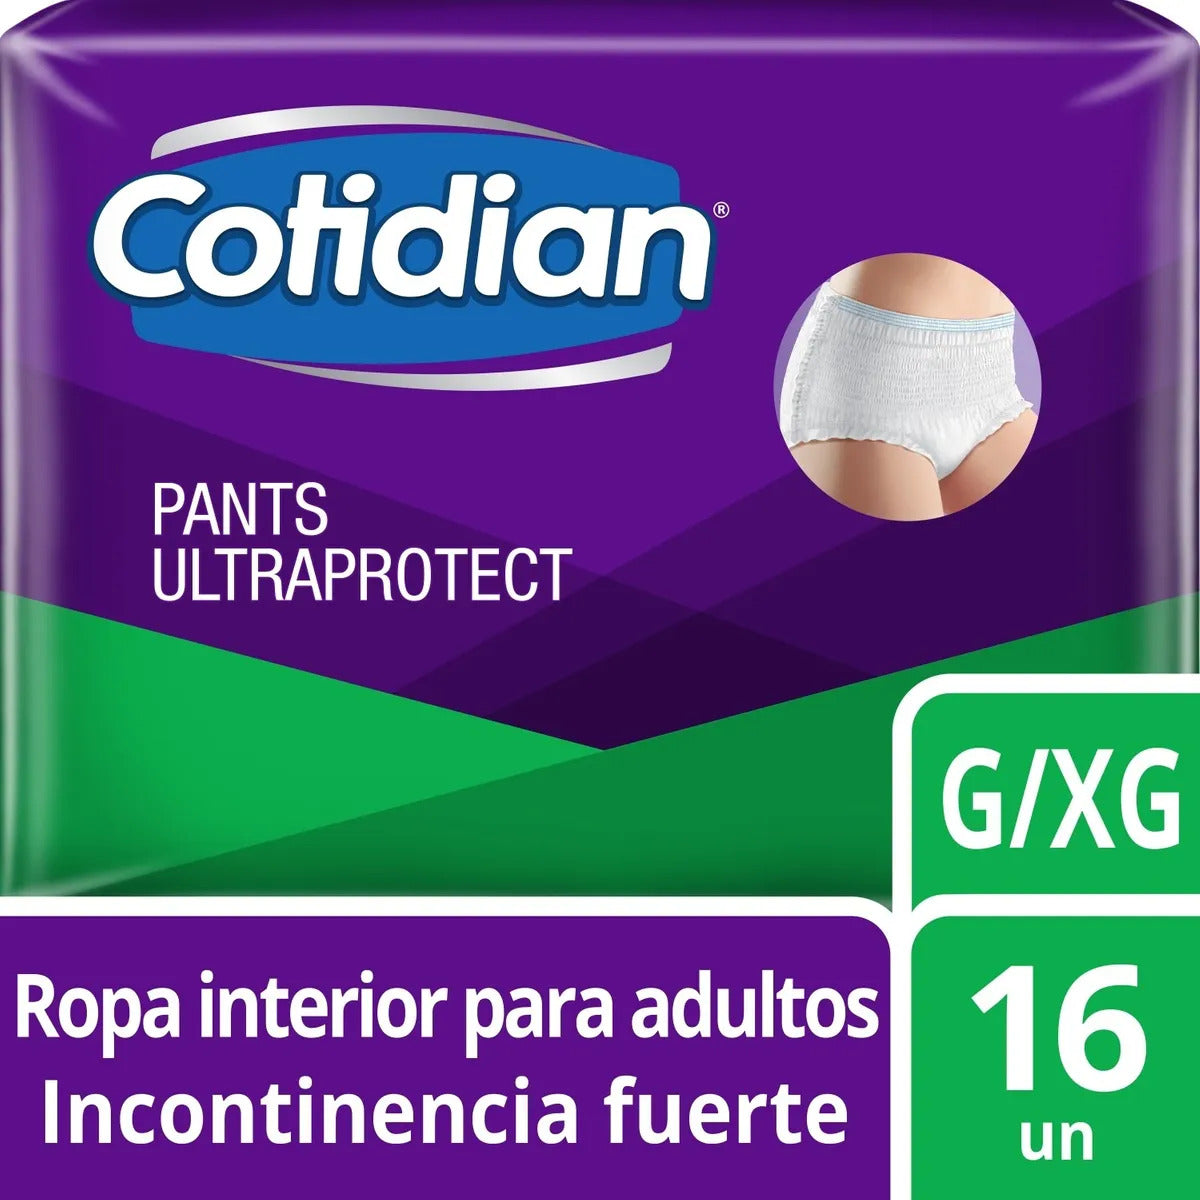 Calzón Pañal Cotidian Talla G/XG x 16 unids – MedPartners